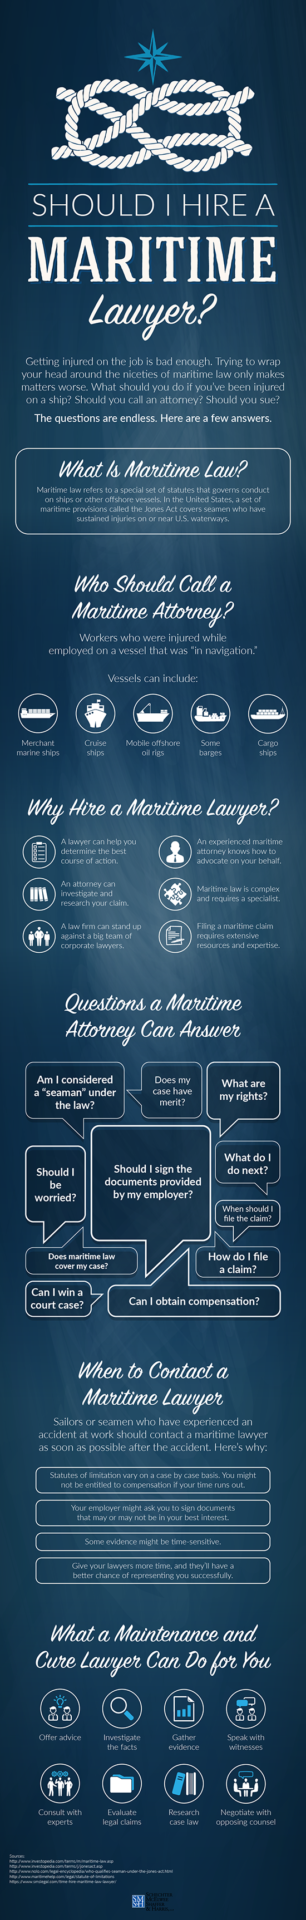 Should I Hire a Maritime Lawyer?